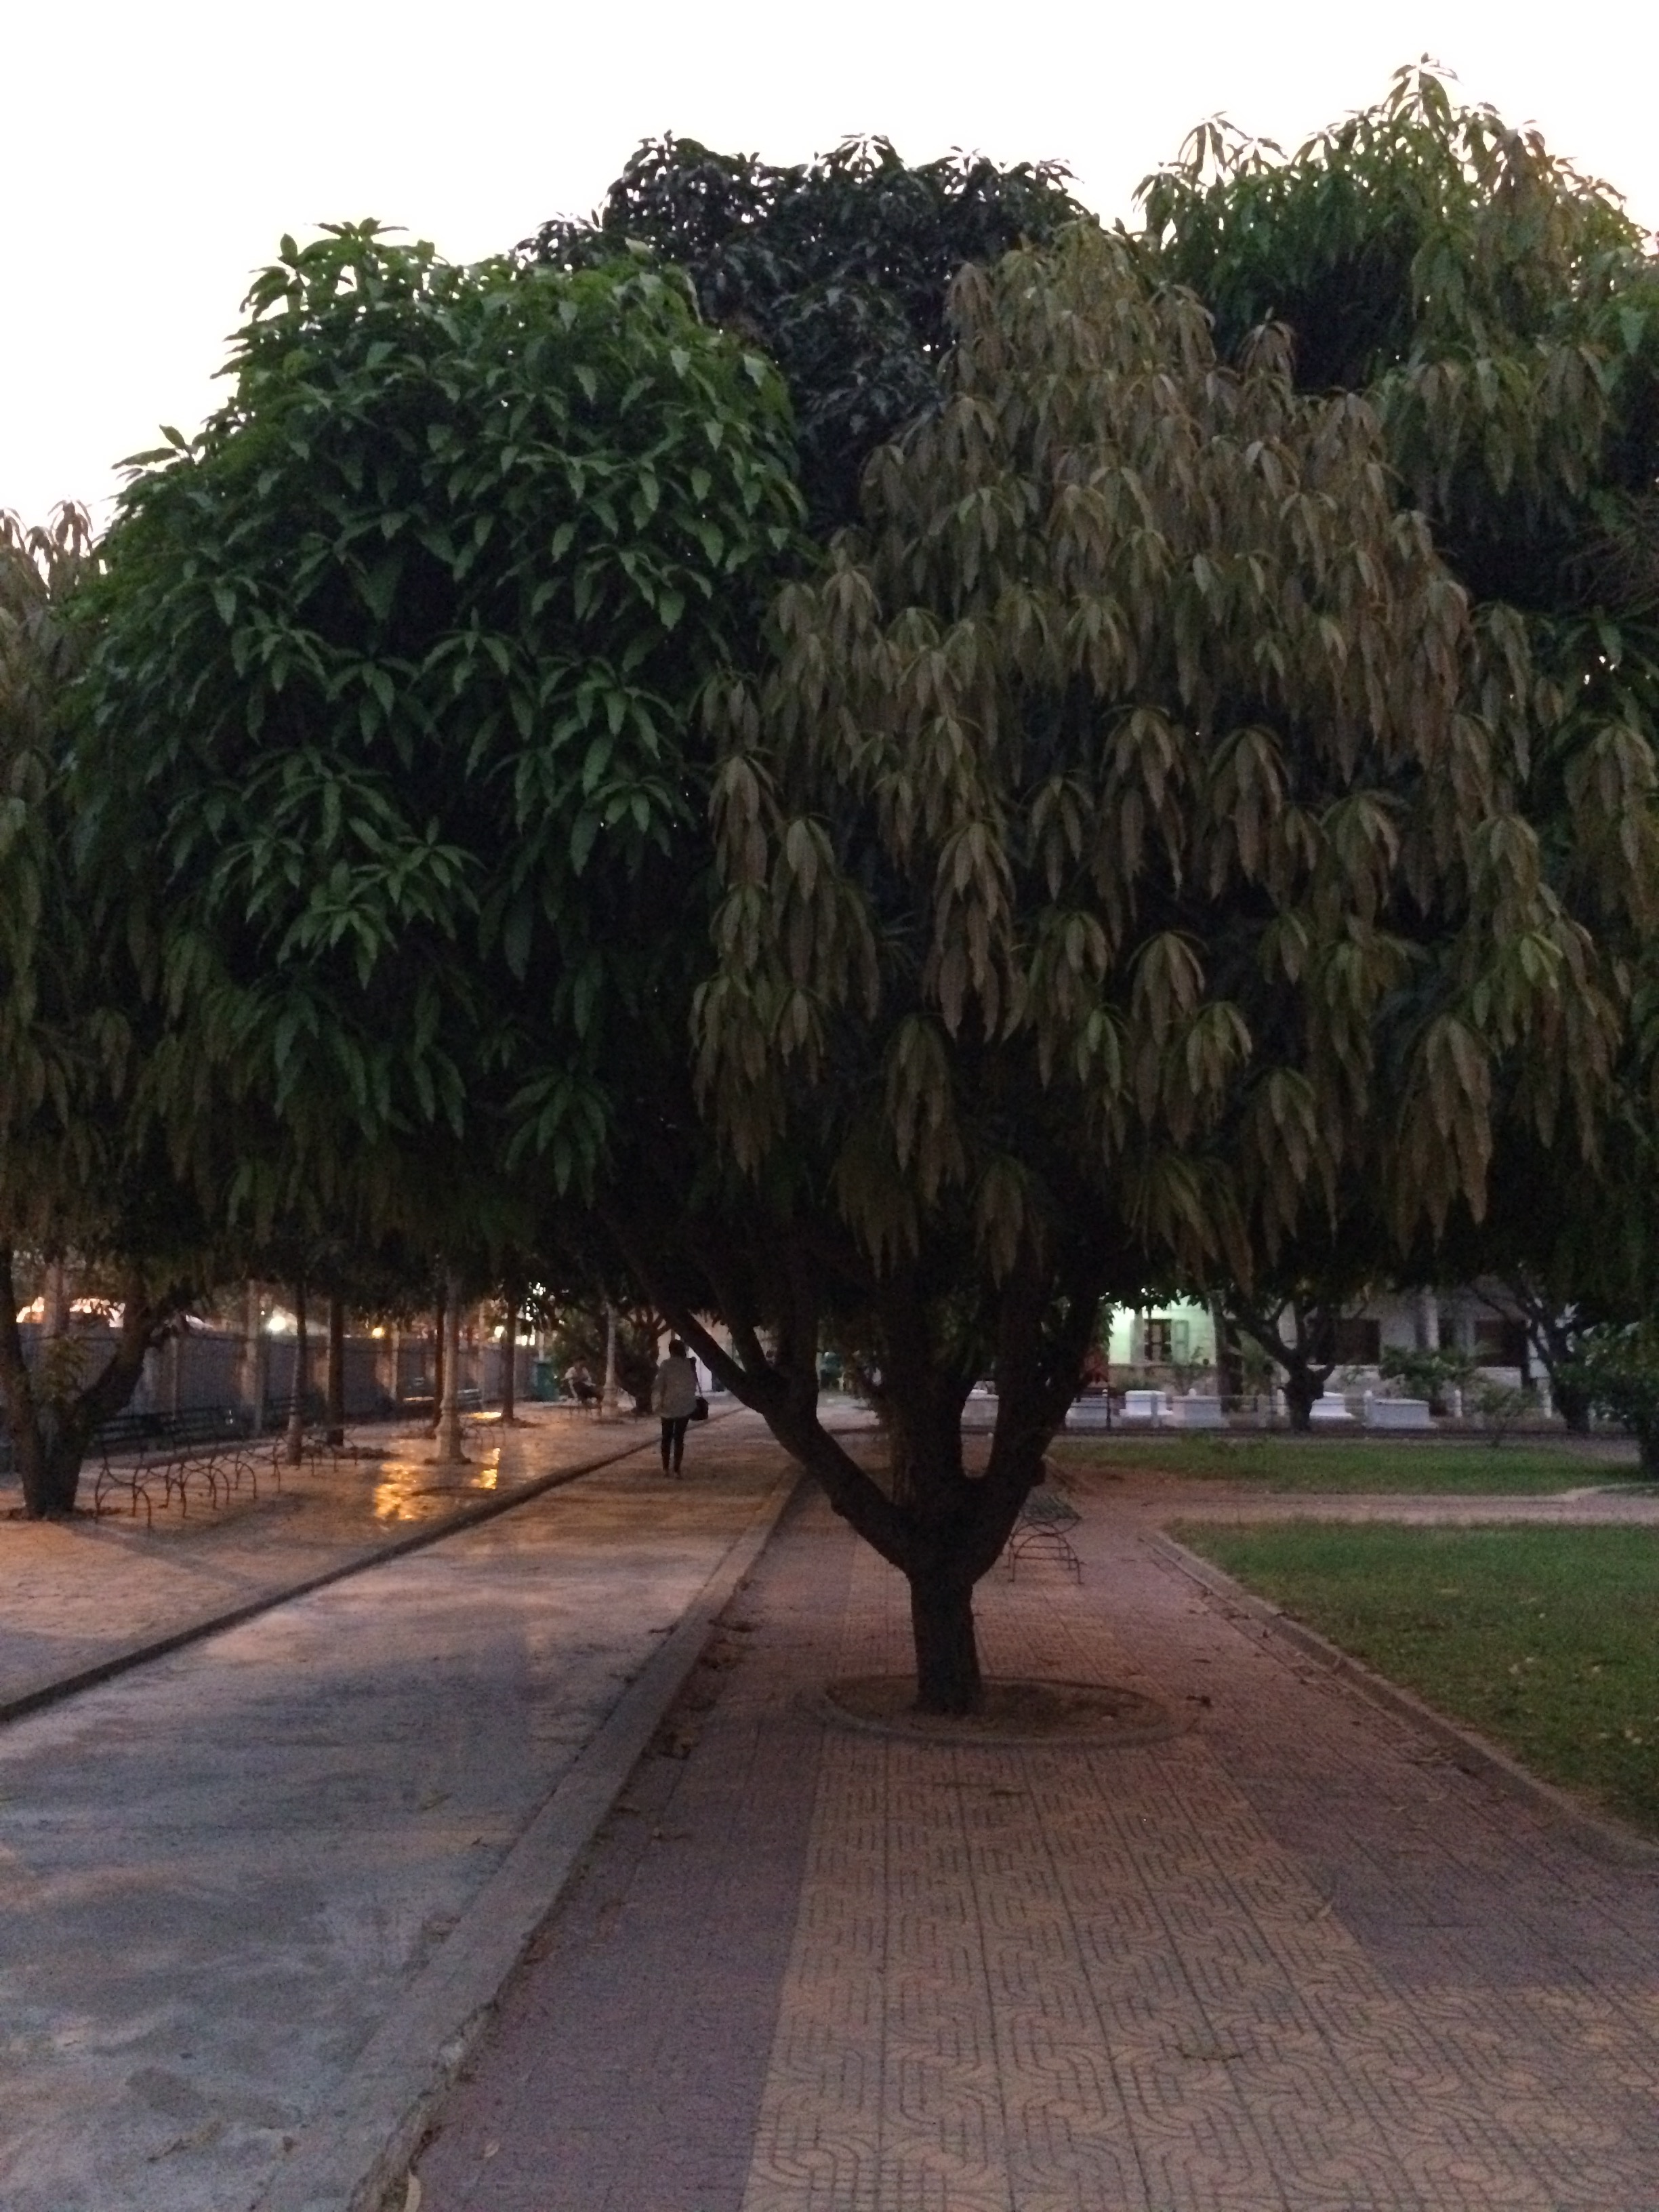 Sirtii Canbaha (The secret of the mango tree)